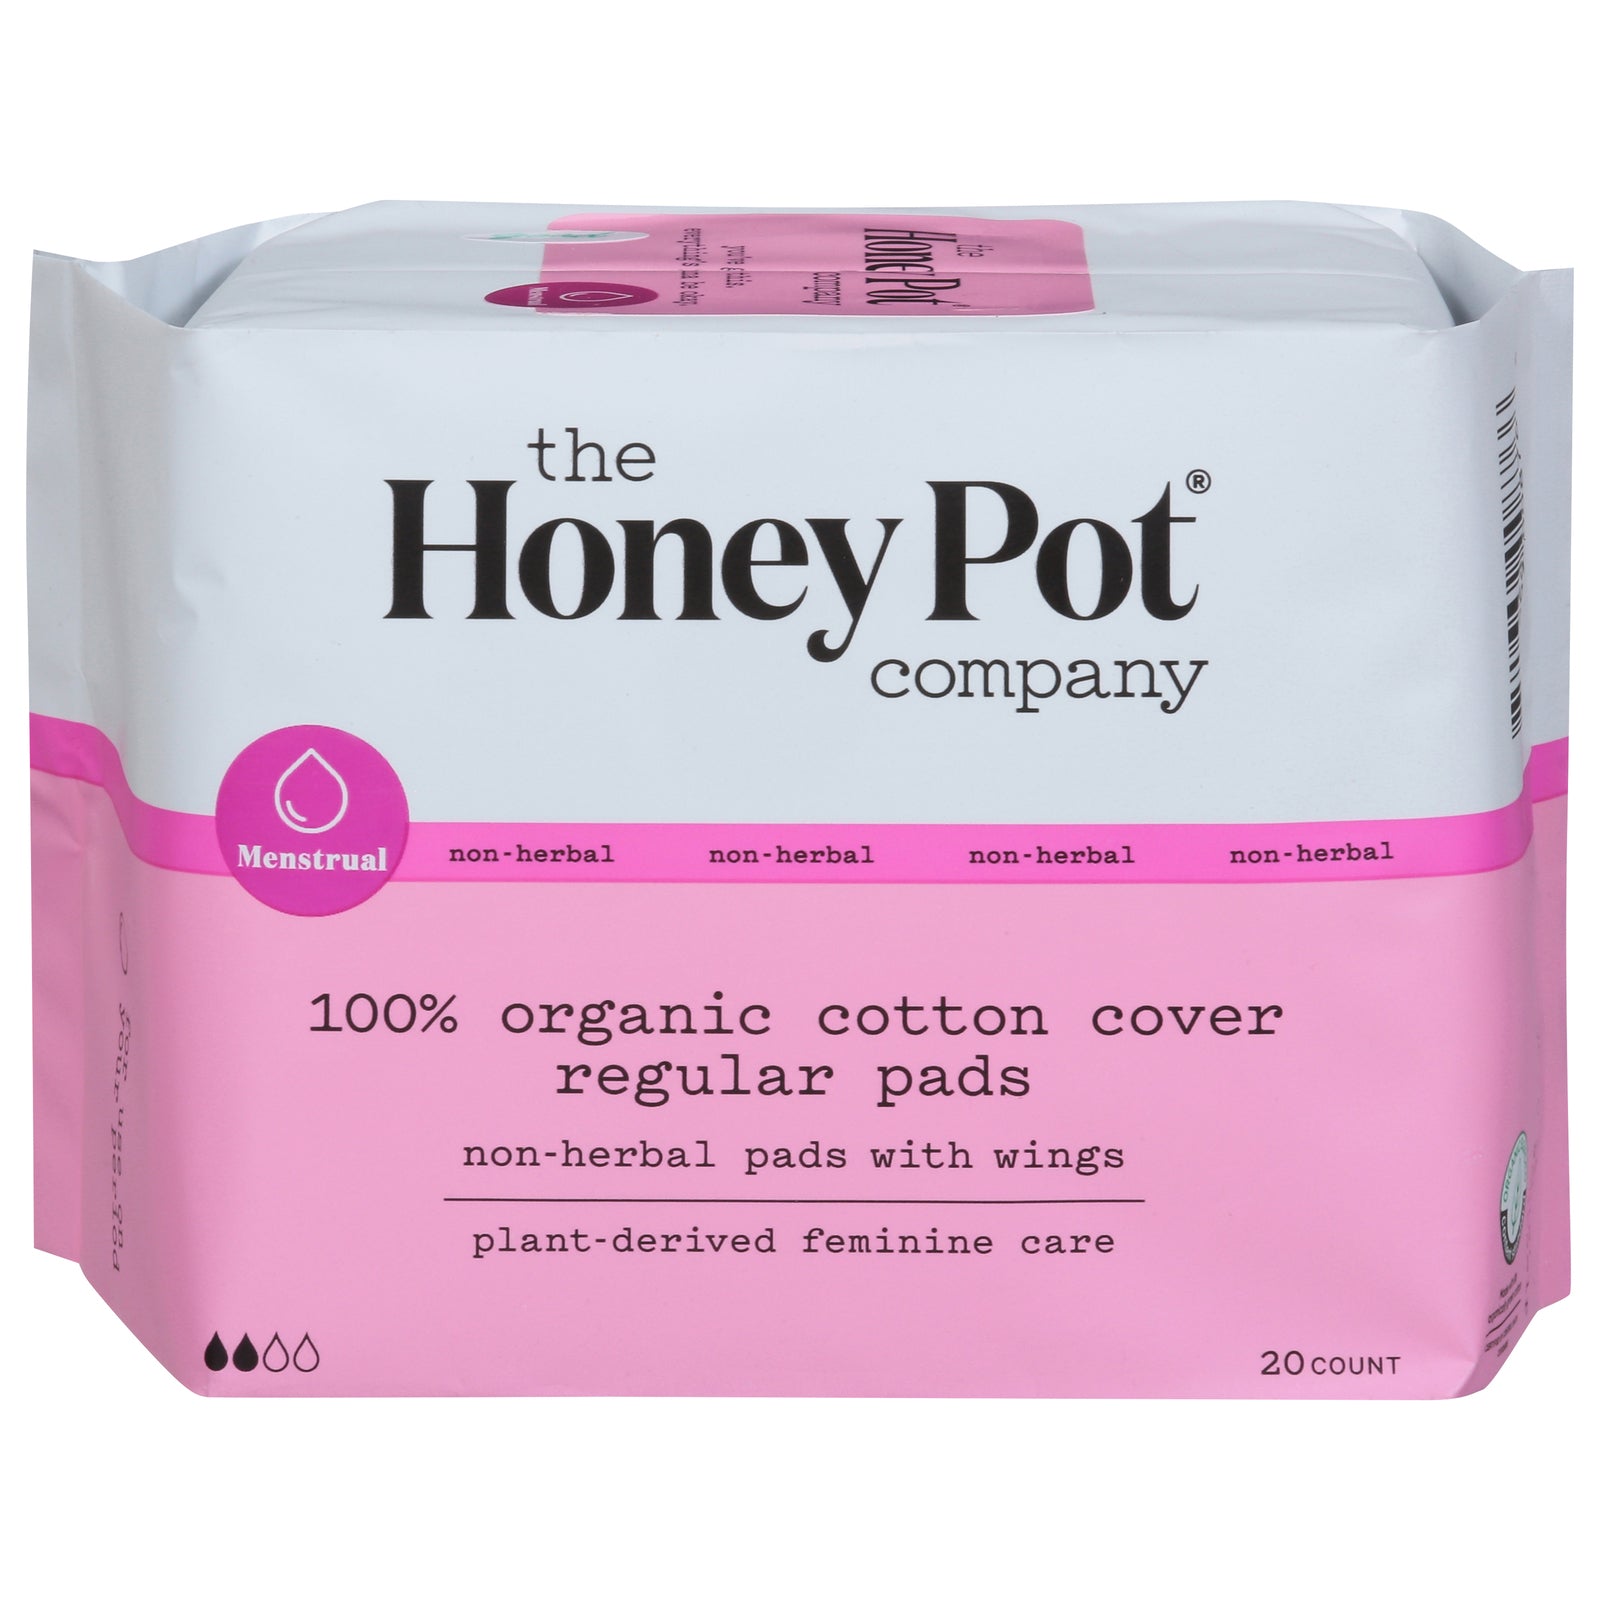 FSA-Approved The Honey Pot Pads Menstrual Regular Nonherbal, 20 Ct – BuyFSA